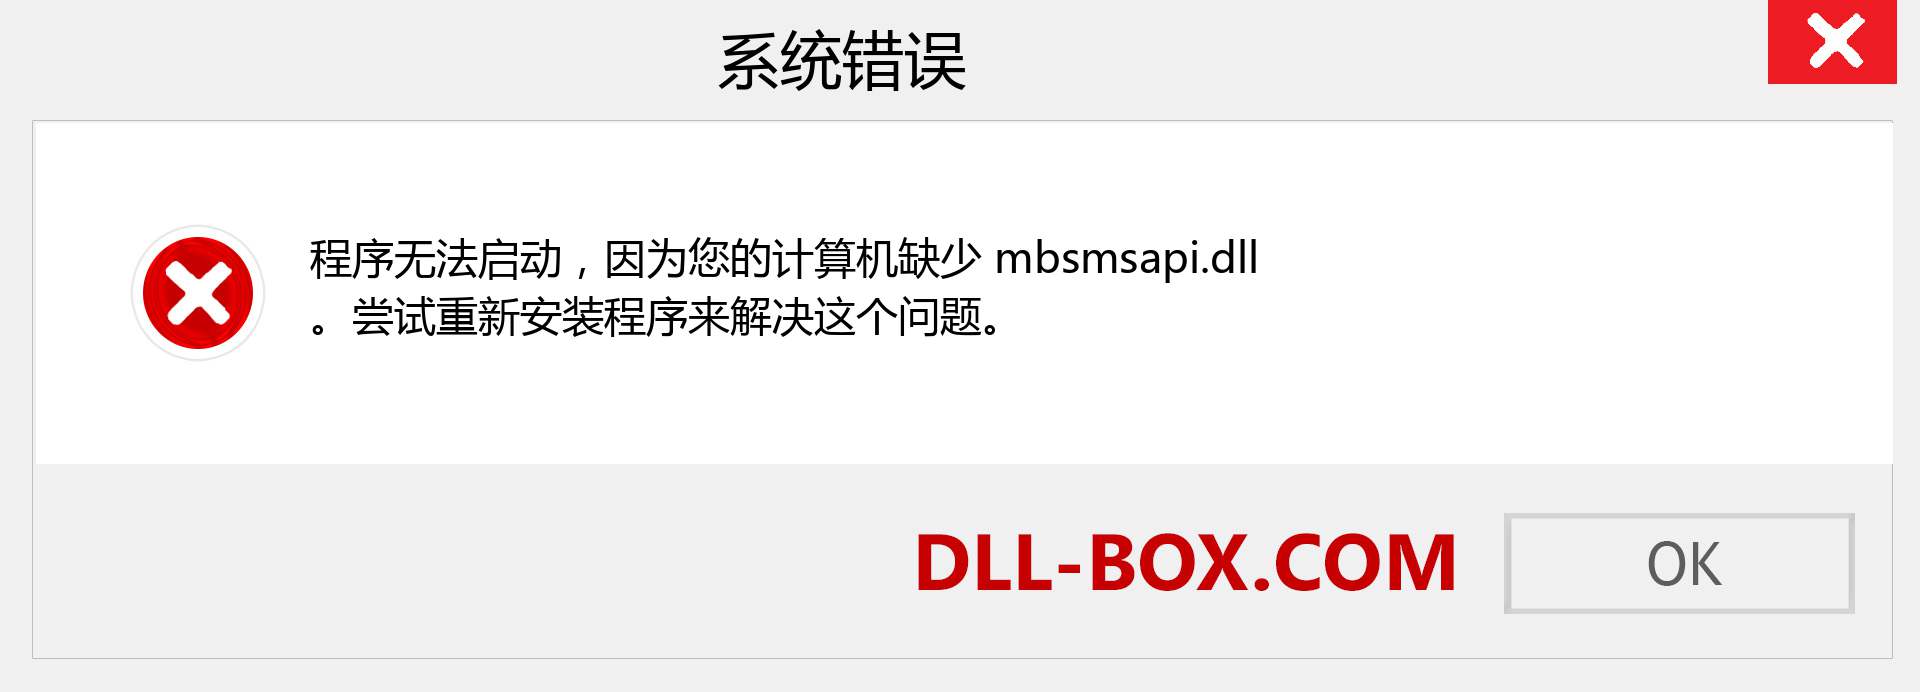 mbsmsapi.dll 文件丢失？。 适用于 Windows 7、8、10 的下载 - 修复 Windows、照片、图像上的 mbsmsapi dll 丢失错误